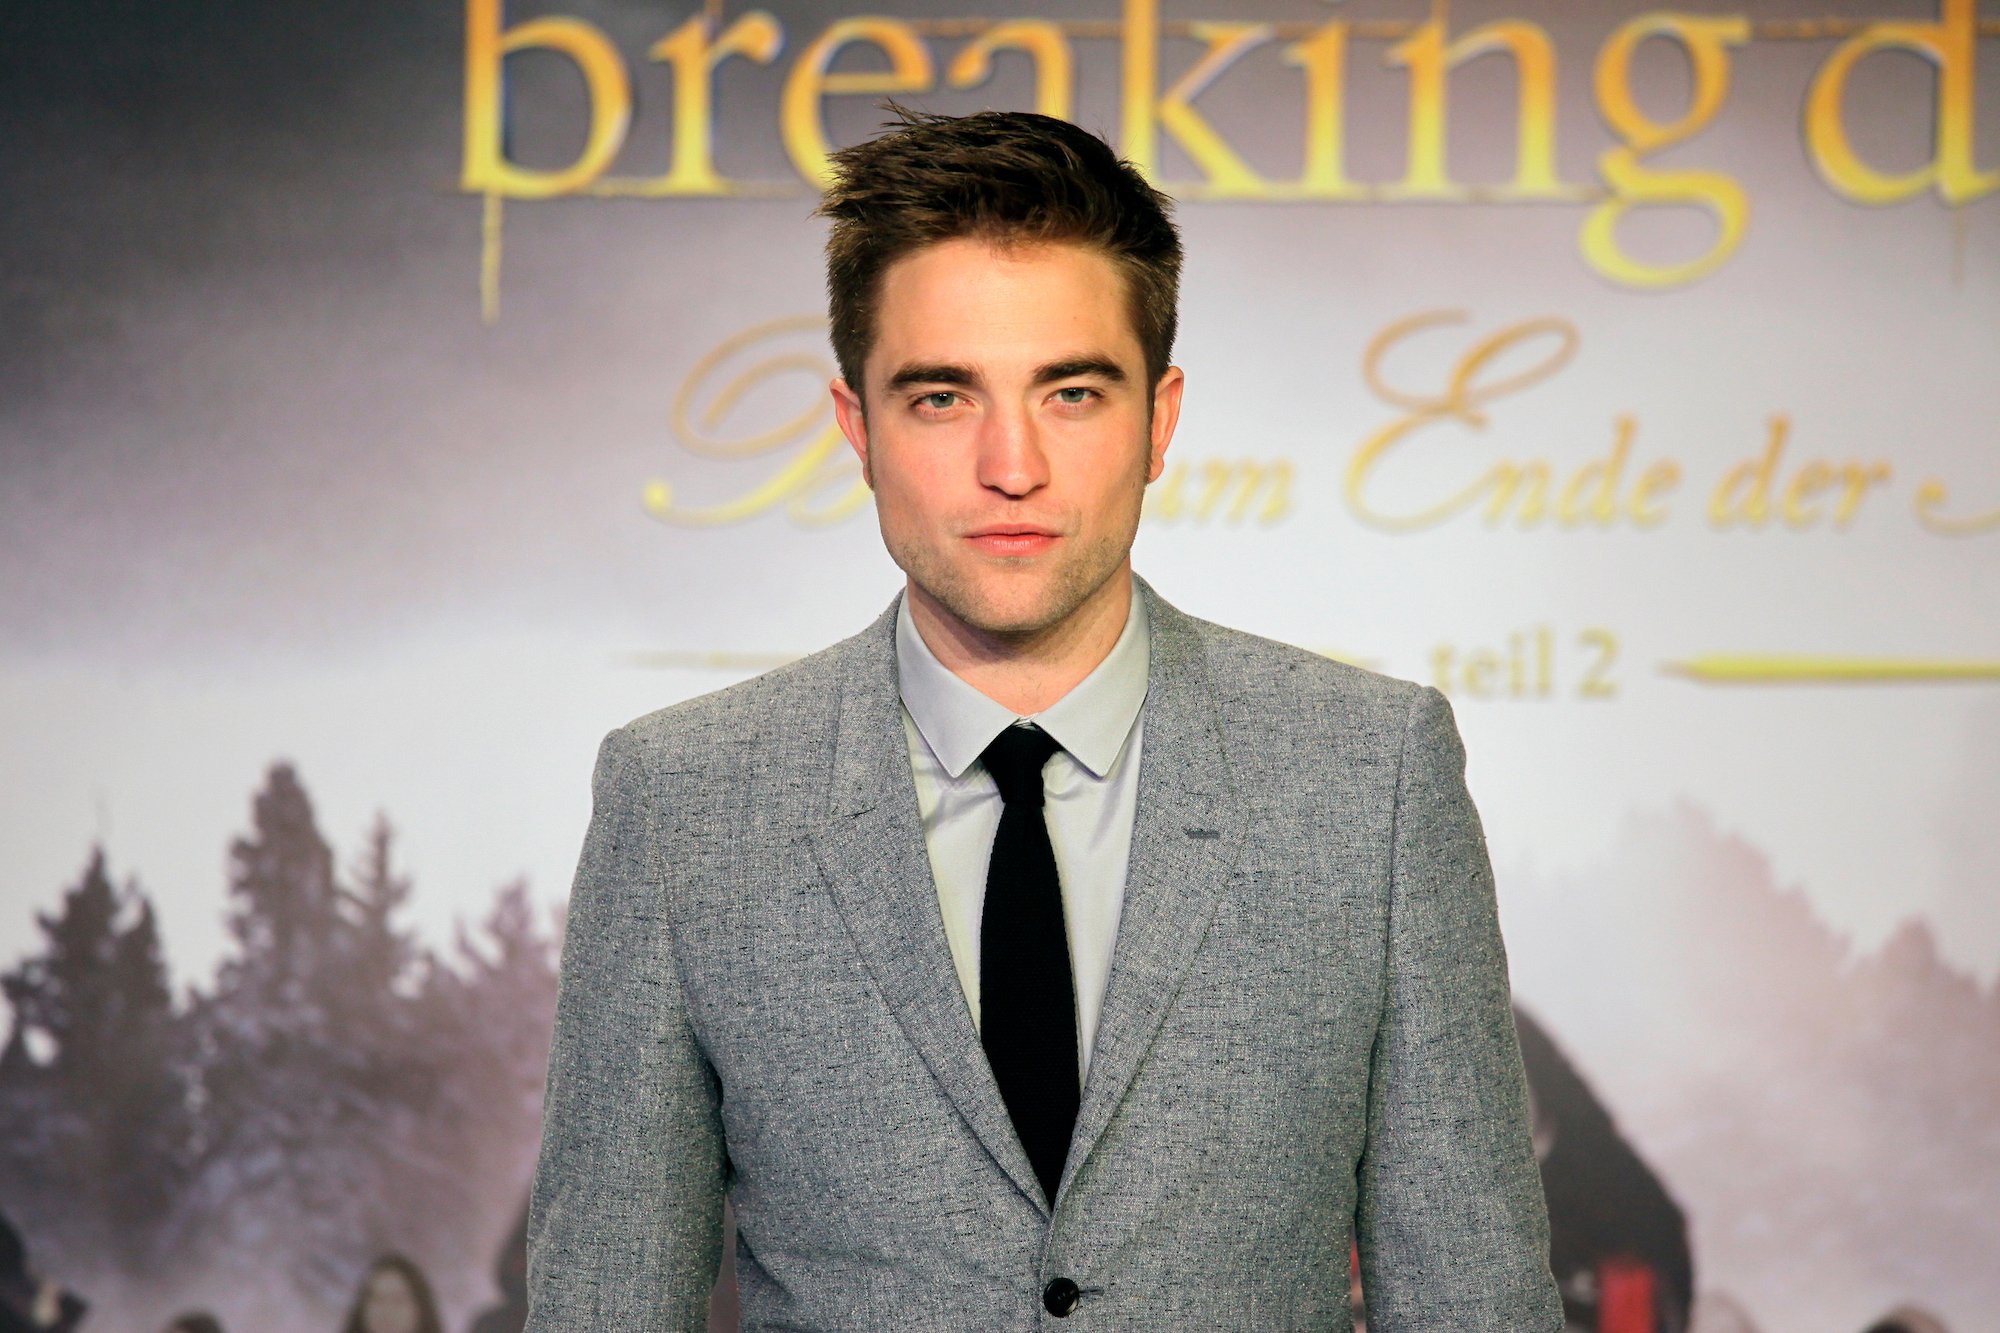 Robert Pattinson at the European premiere for 'Twilight Saga: Breaking Dawn Part 2'